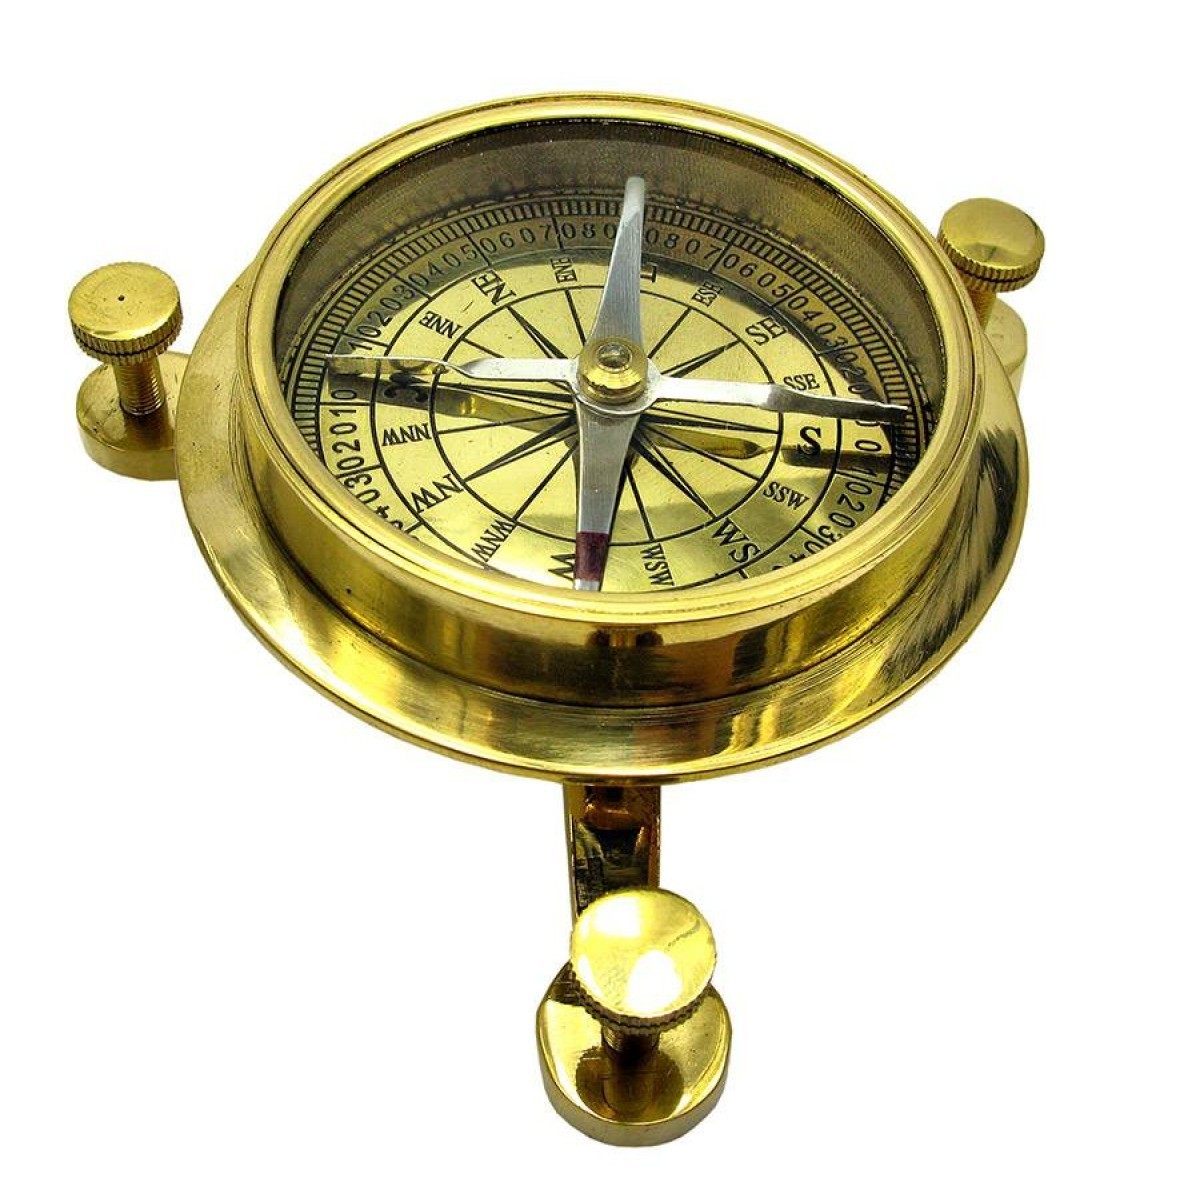 Компас n w s. Морской компас. Магнитный компас. Бронзовый компас. Морской настольный компас.